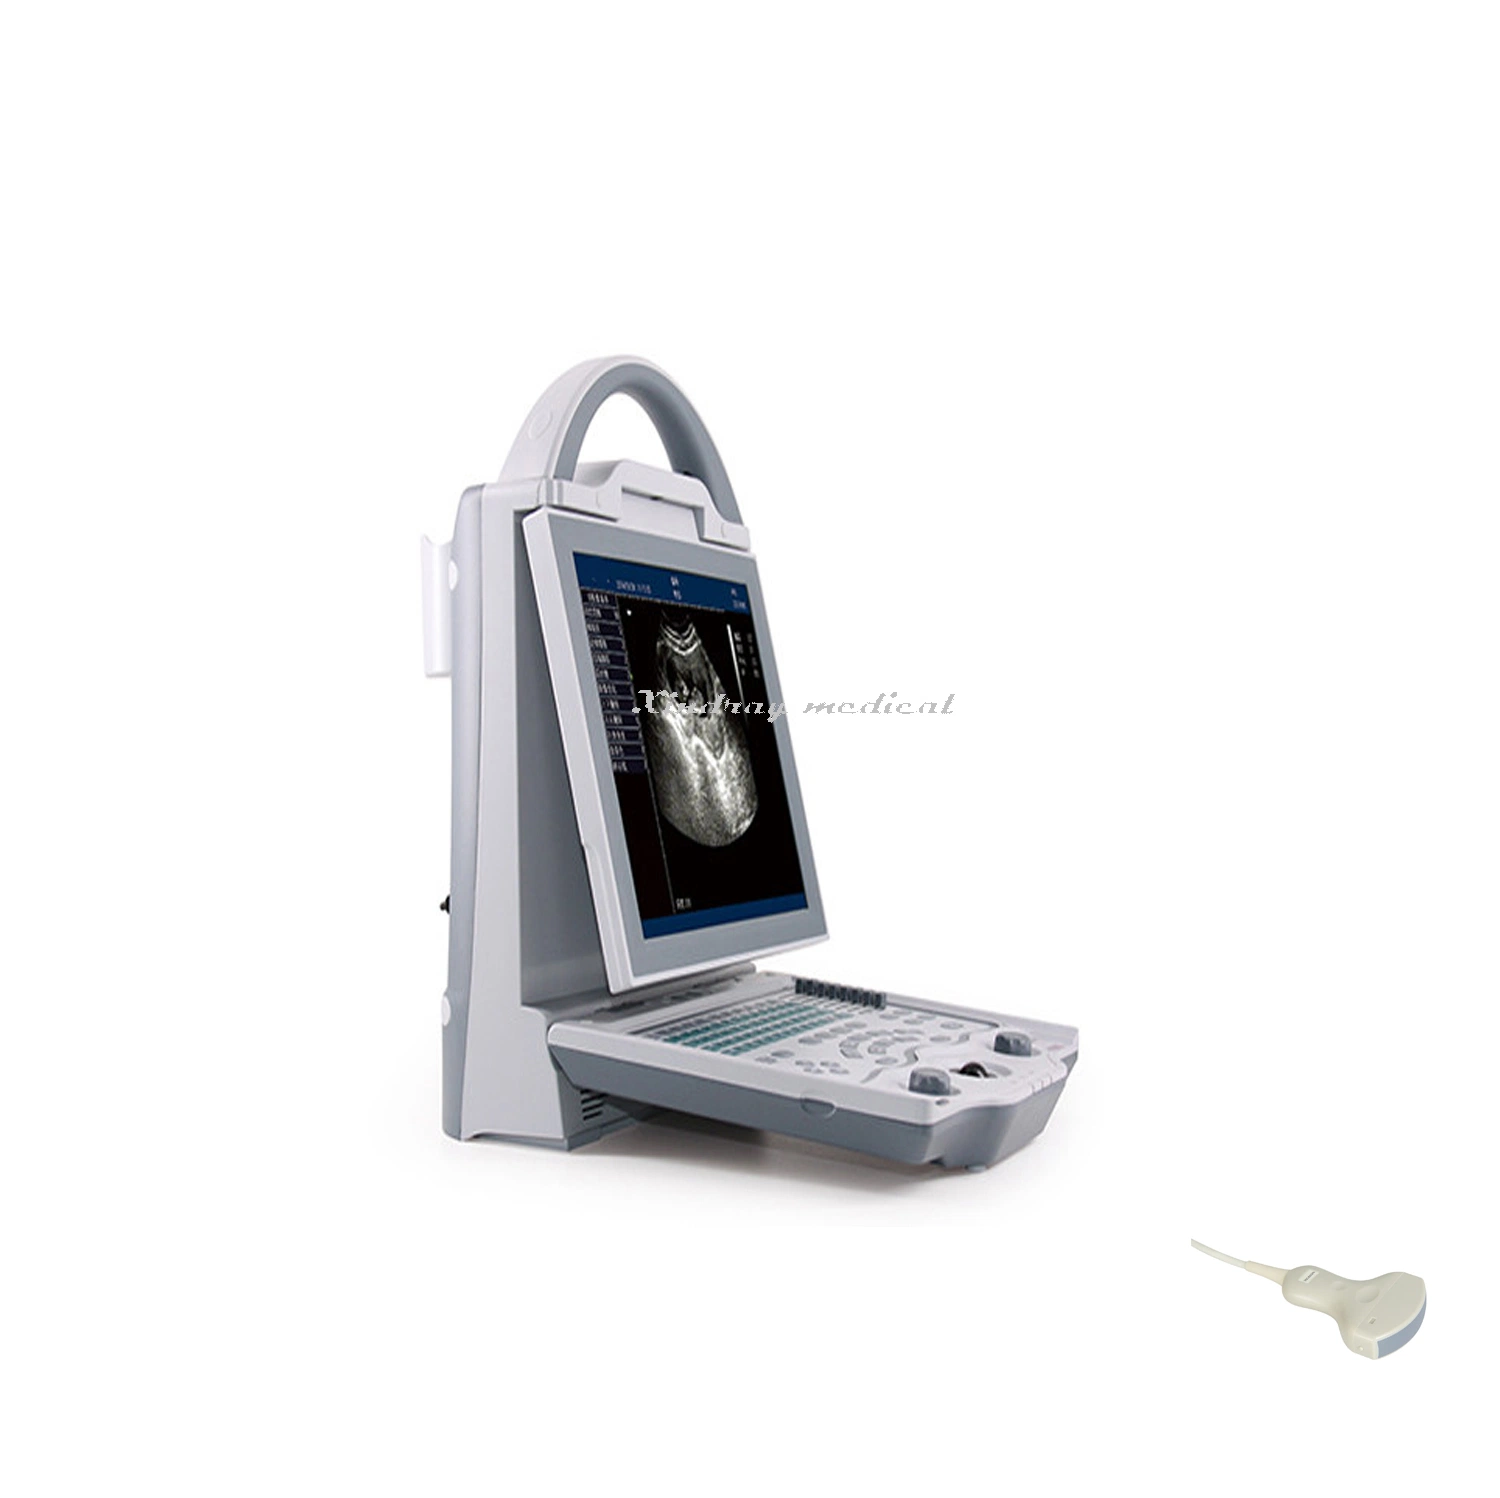 High Quality Manufacturer Price Hospital Medical Diagnosis Equipment Portable Laptop Ultrasound Scanner